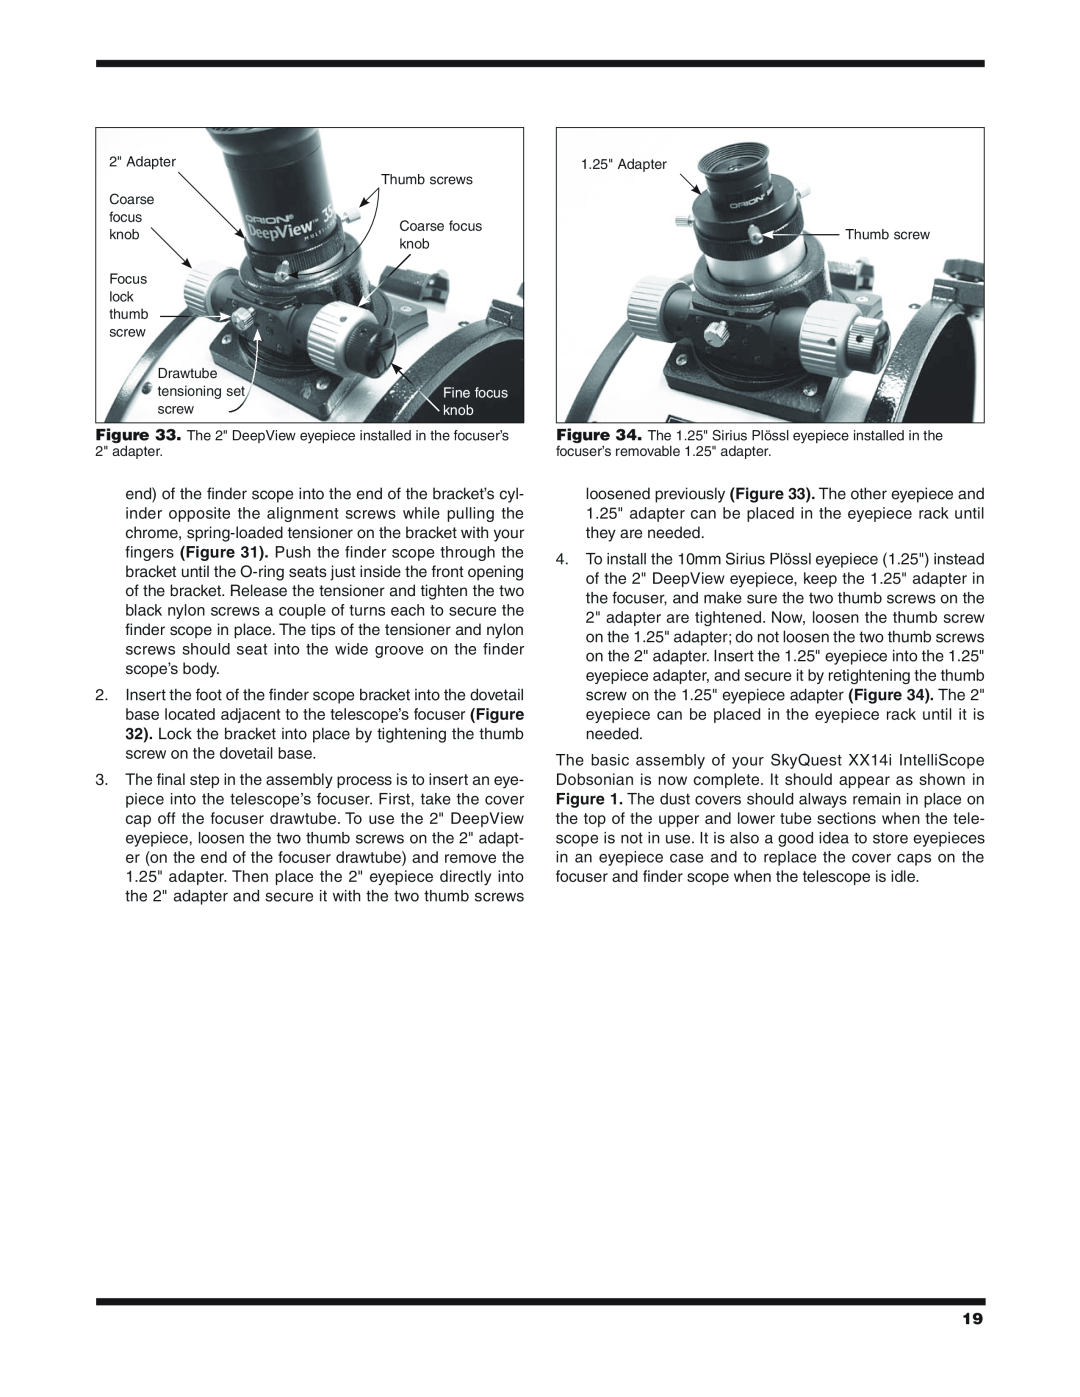 Orion 9791 instruction manual knob, Coarse focus 